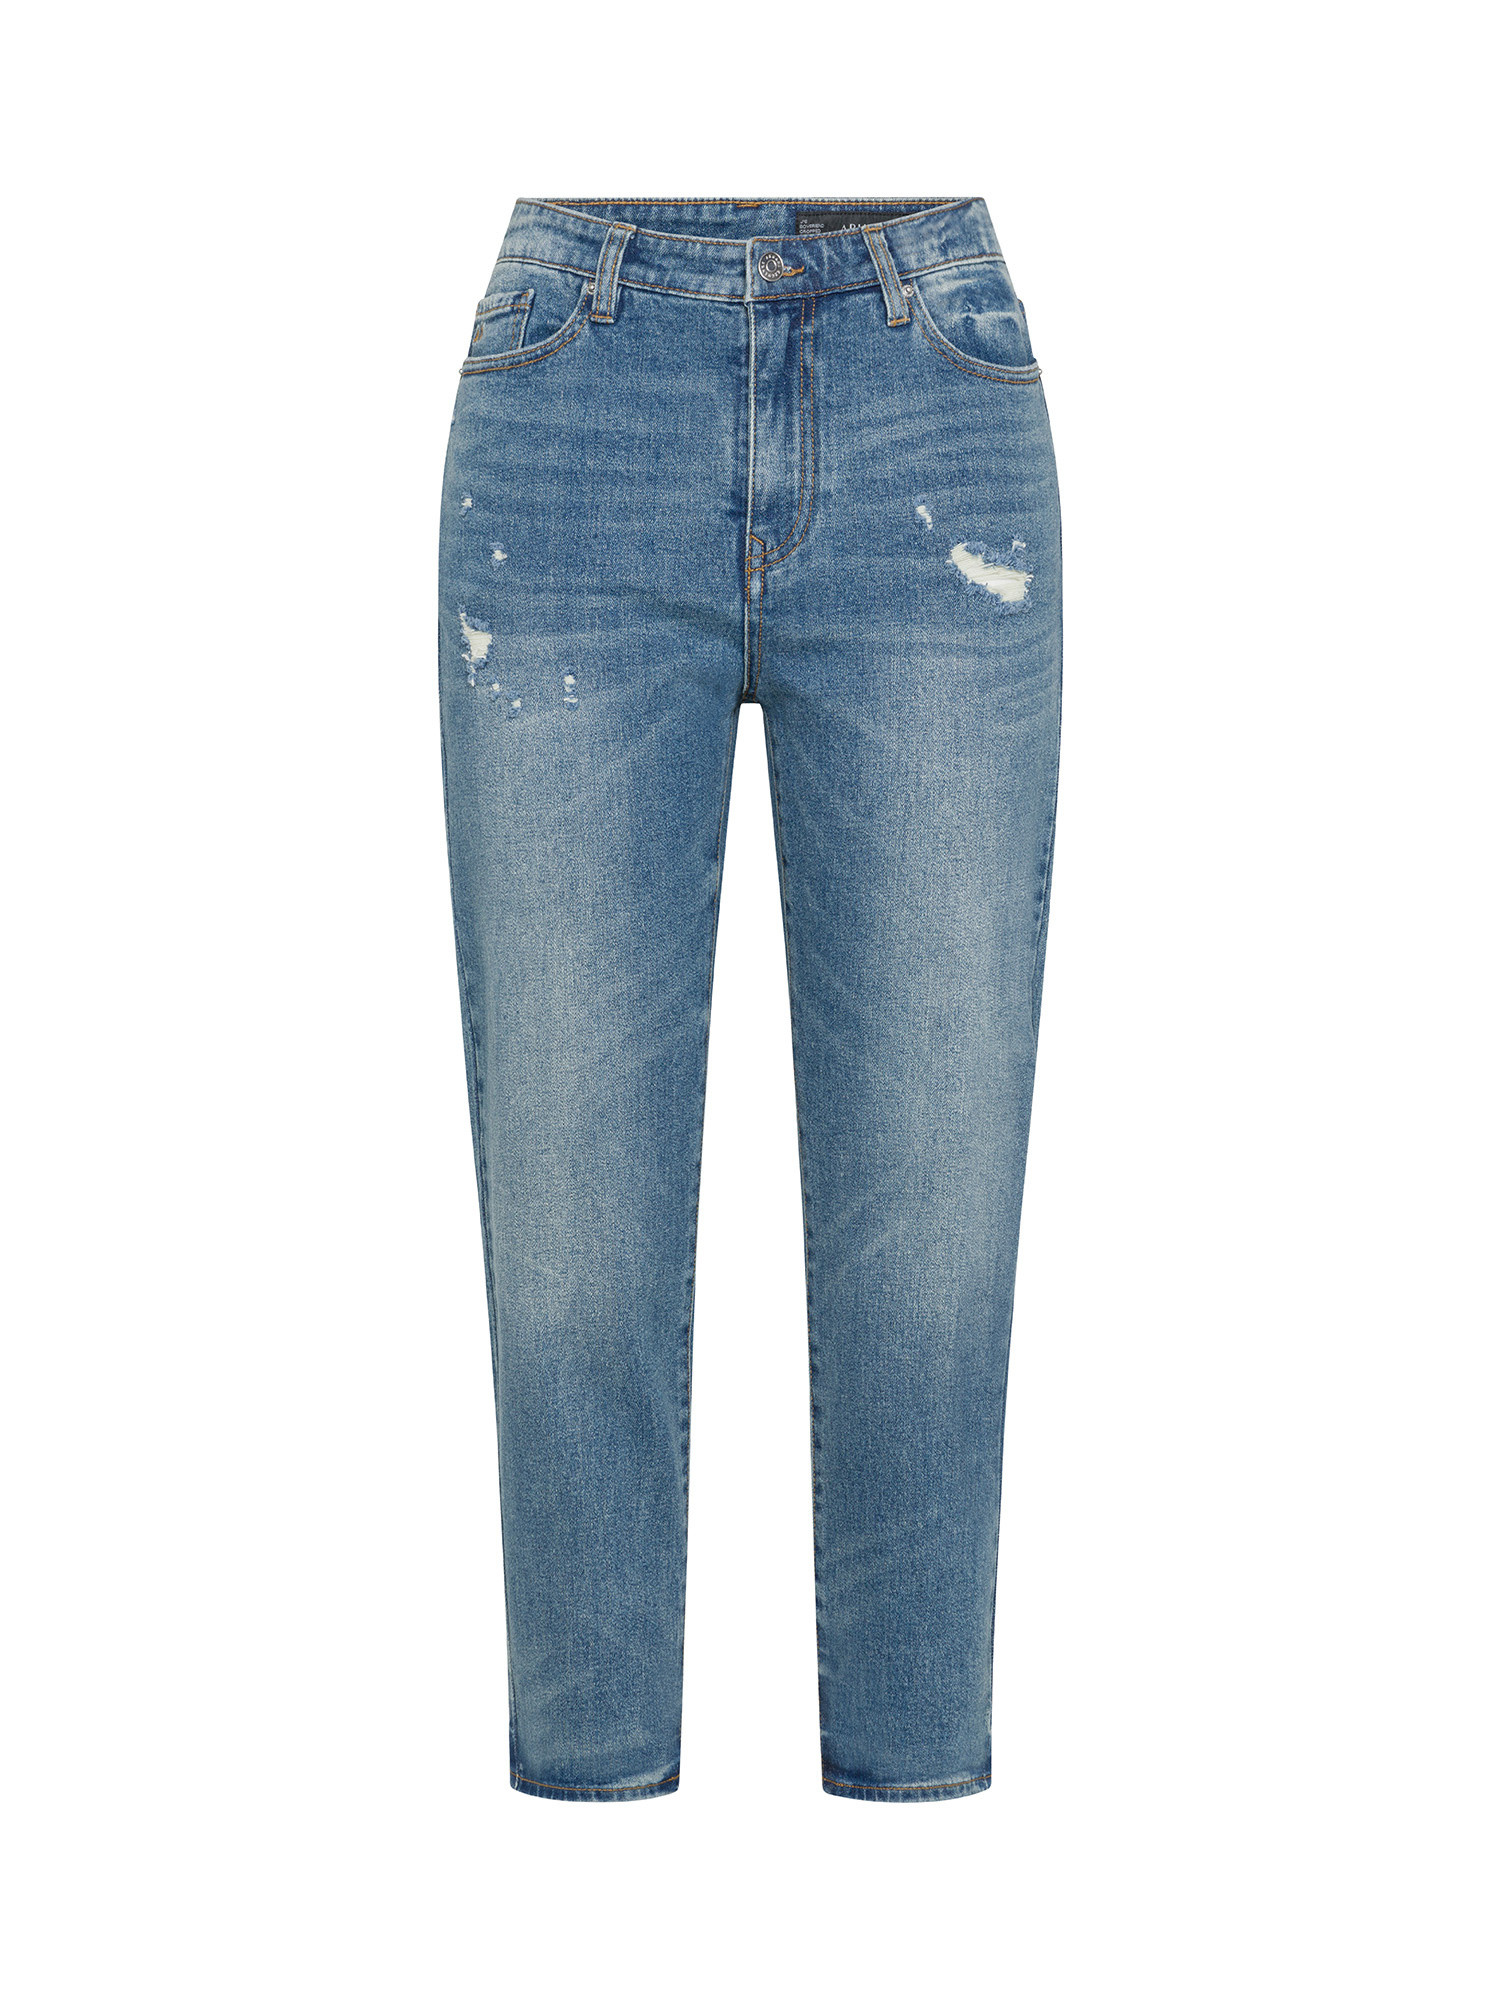 Armani Exchange - Jeans cinque tasche con logo, Denim, large image number 0